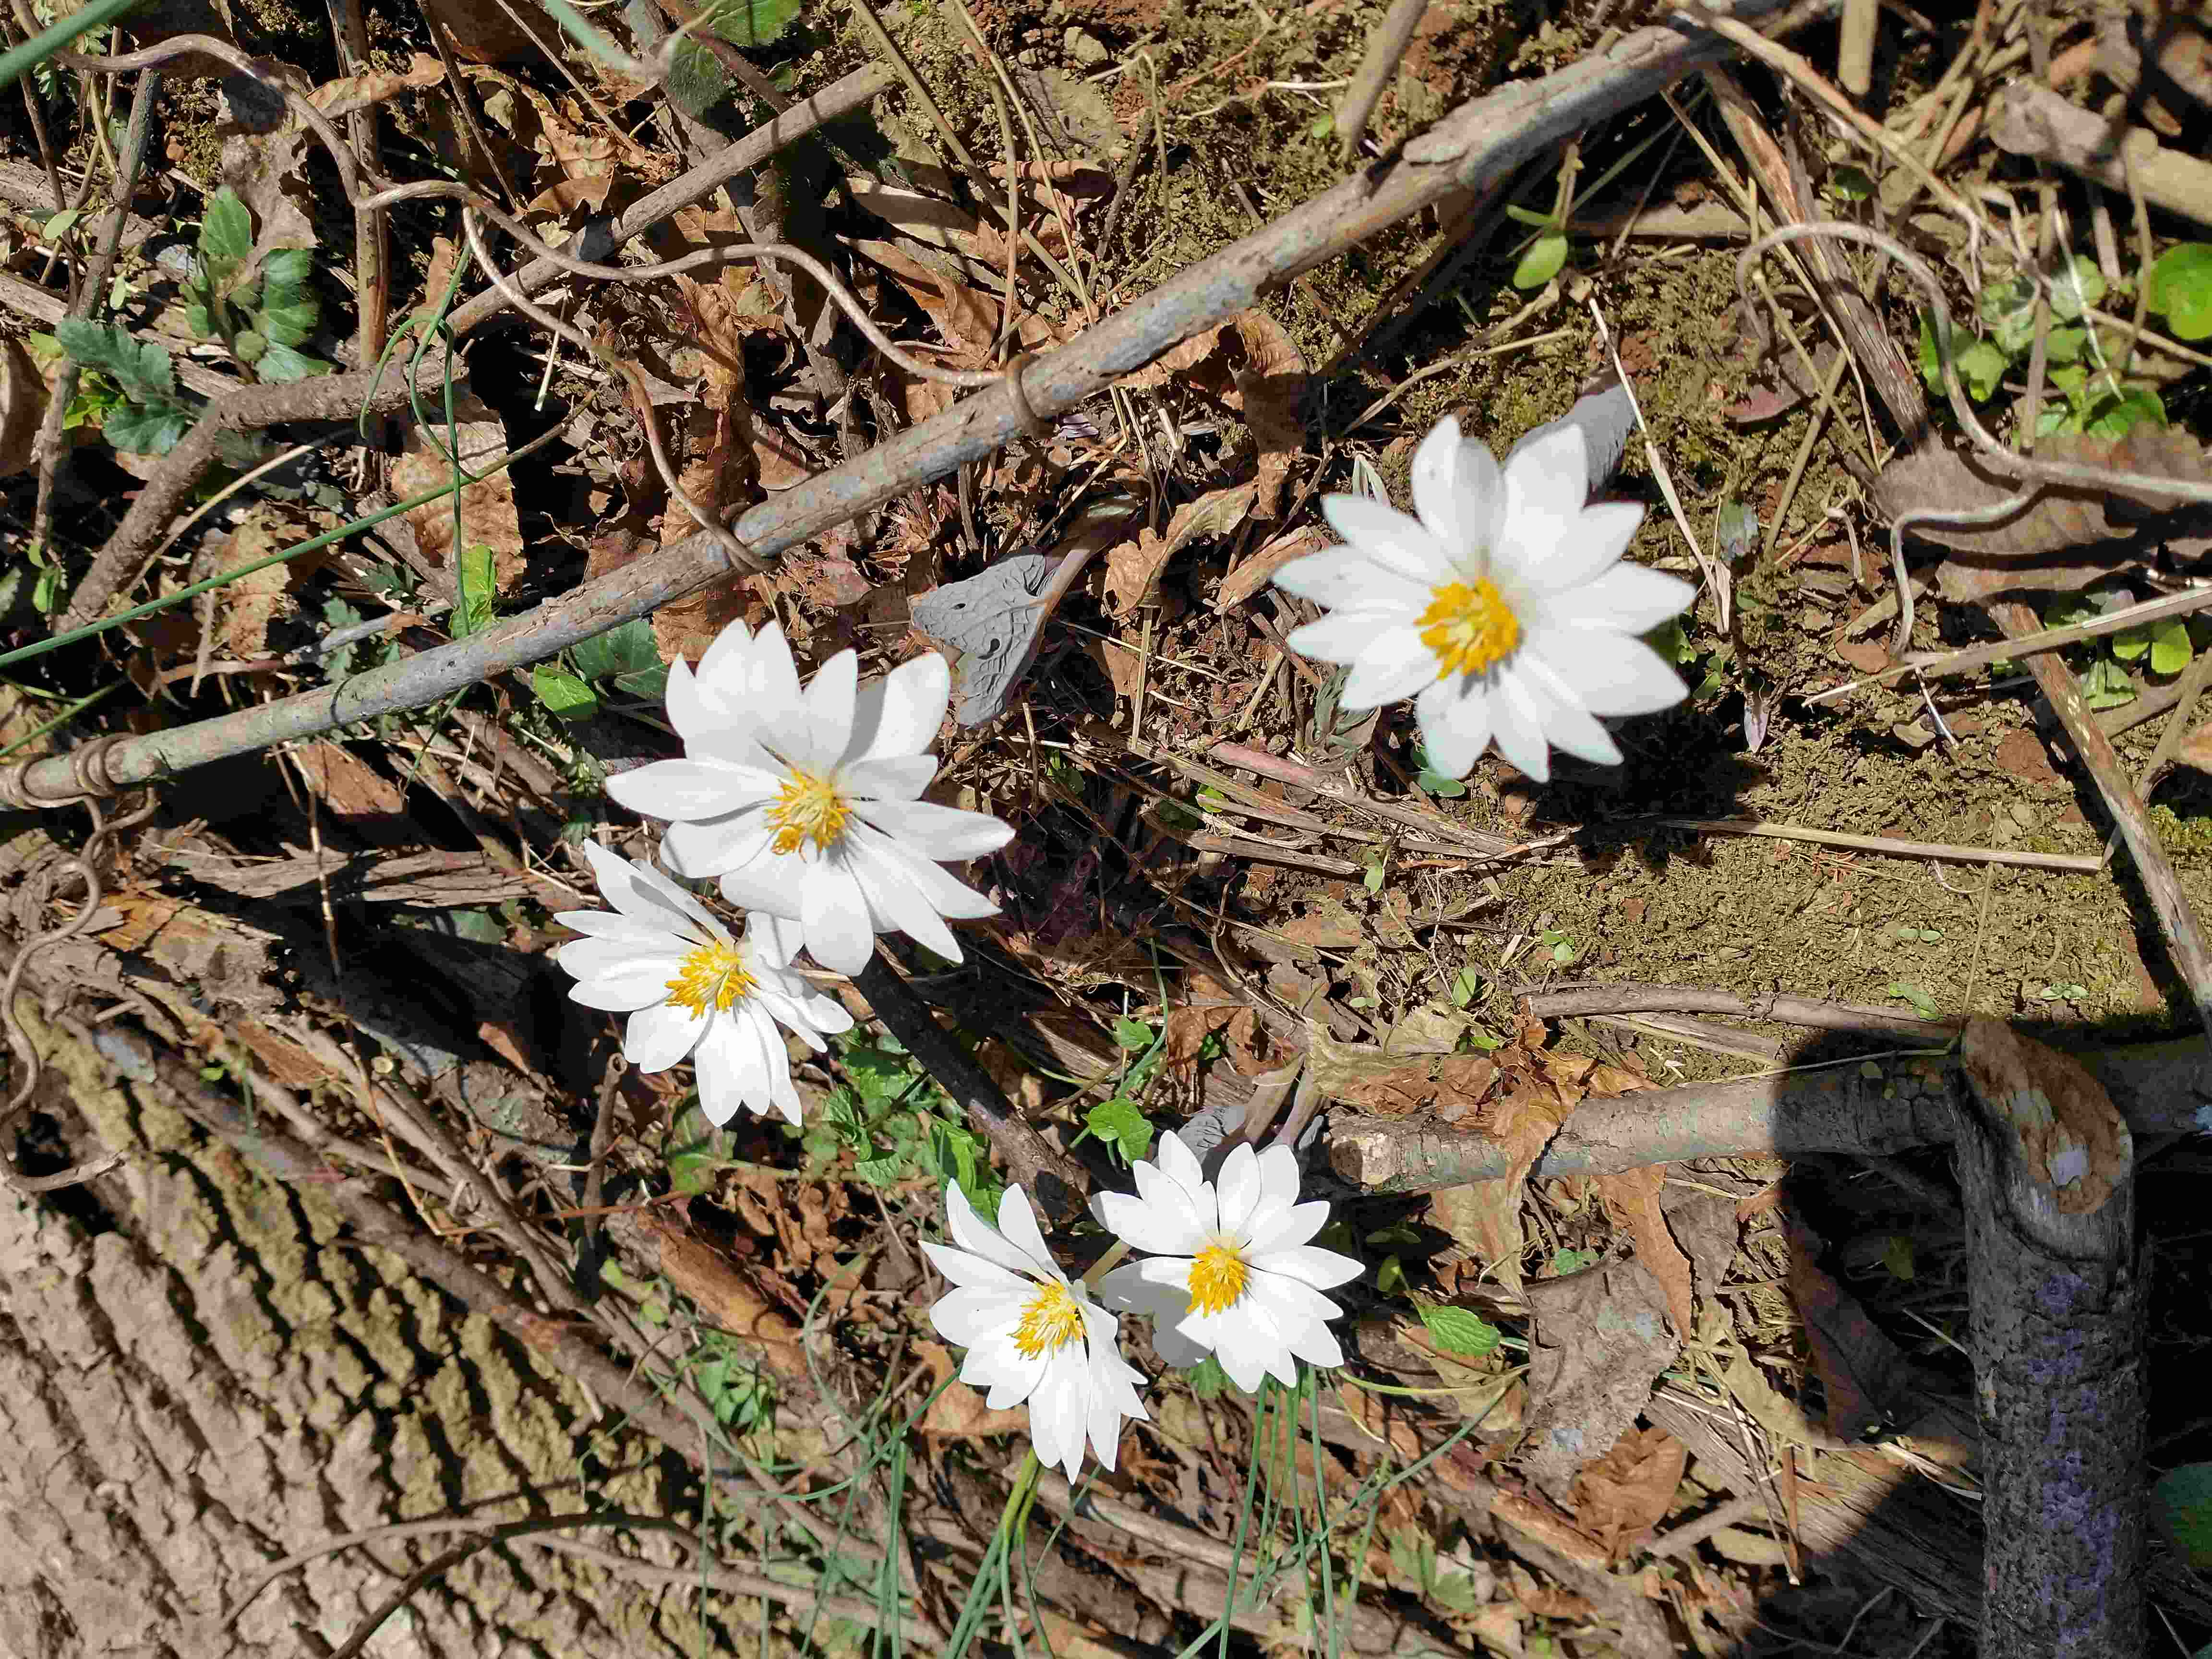 Figure 2: “Spring Flowers” by George Jones is licenced under CC SA 4.0